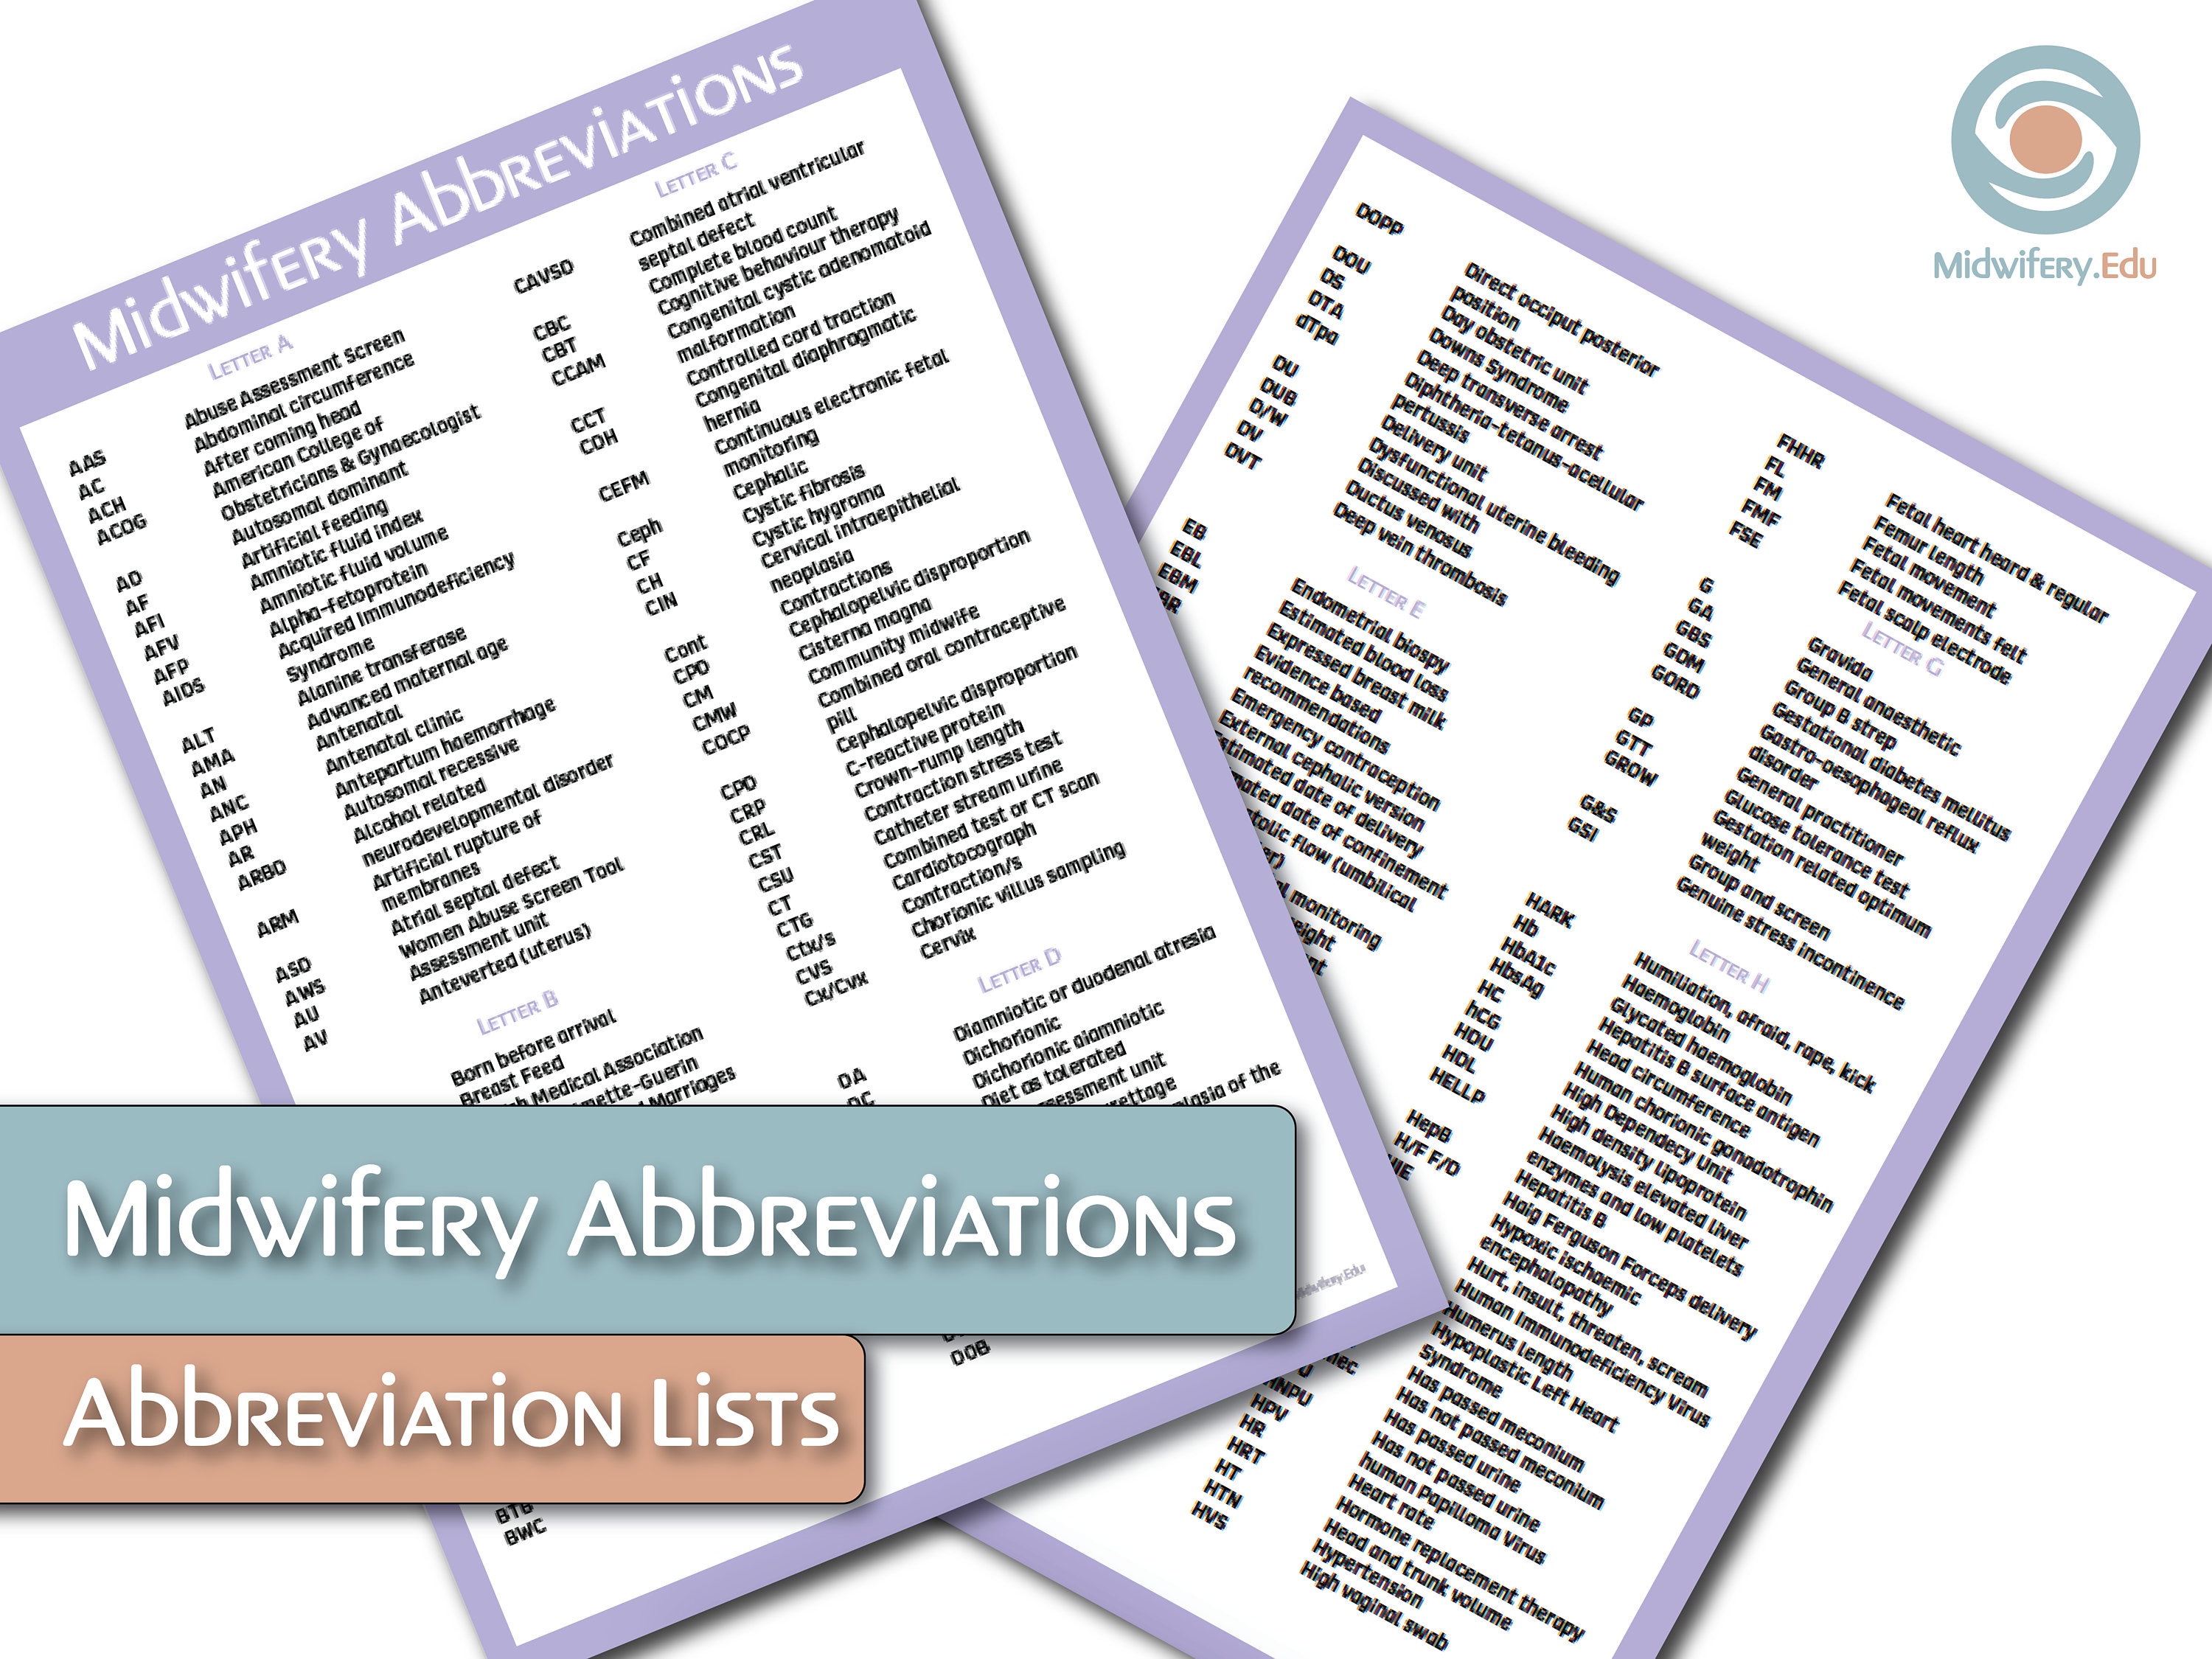 Midwifery Abbreviation List pic pic